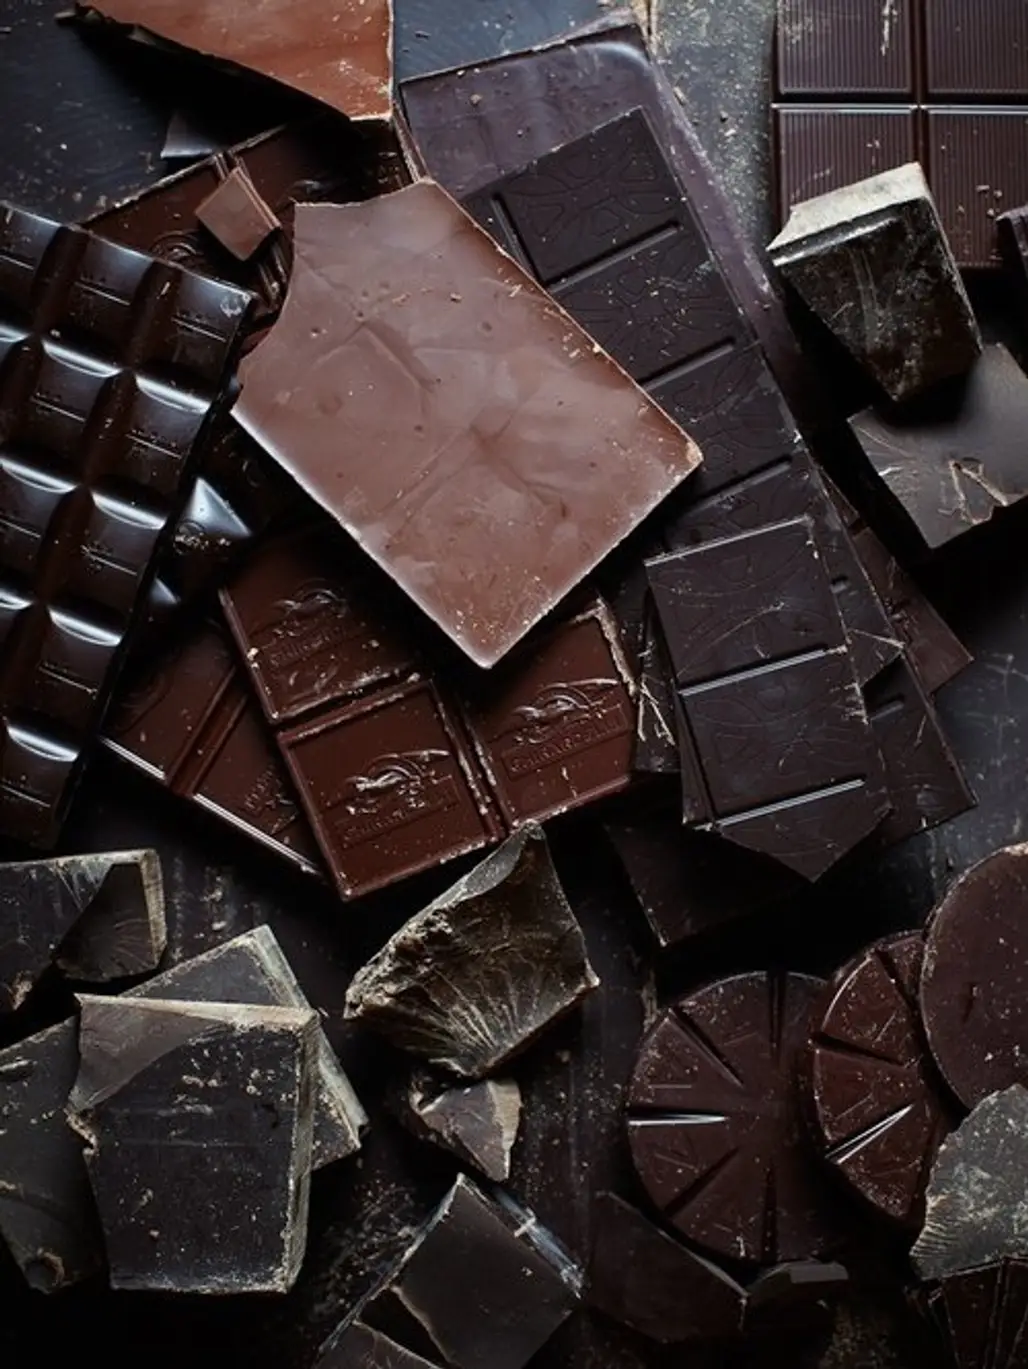 A Square of Dark Chocolate